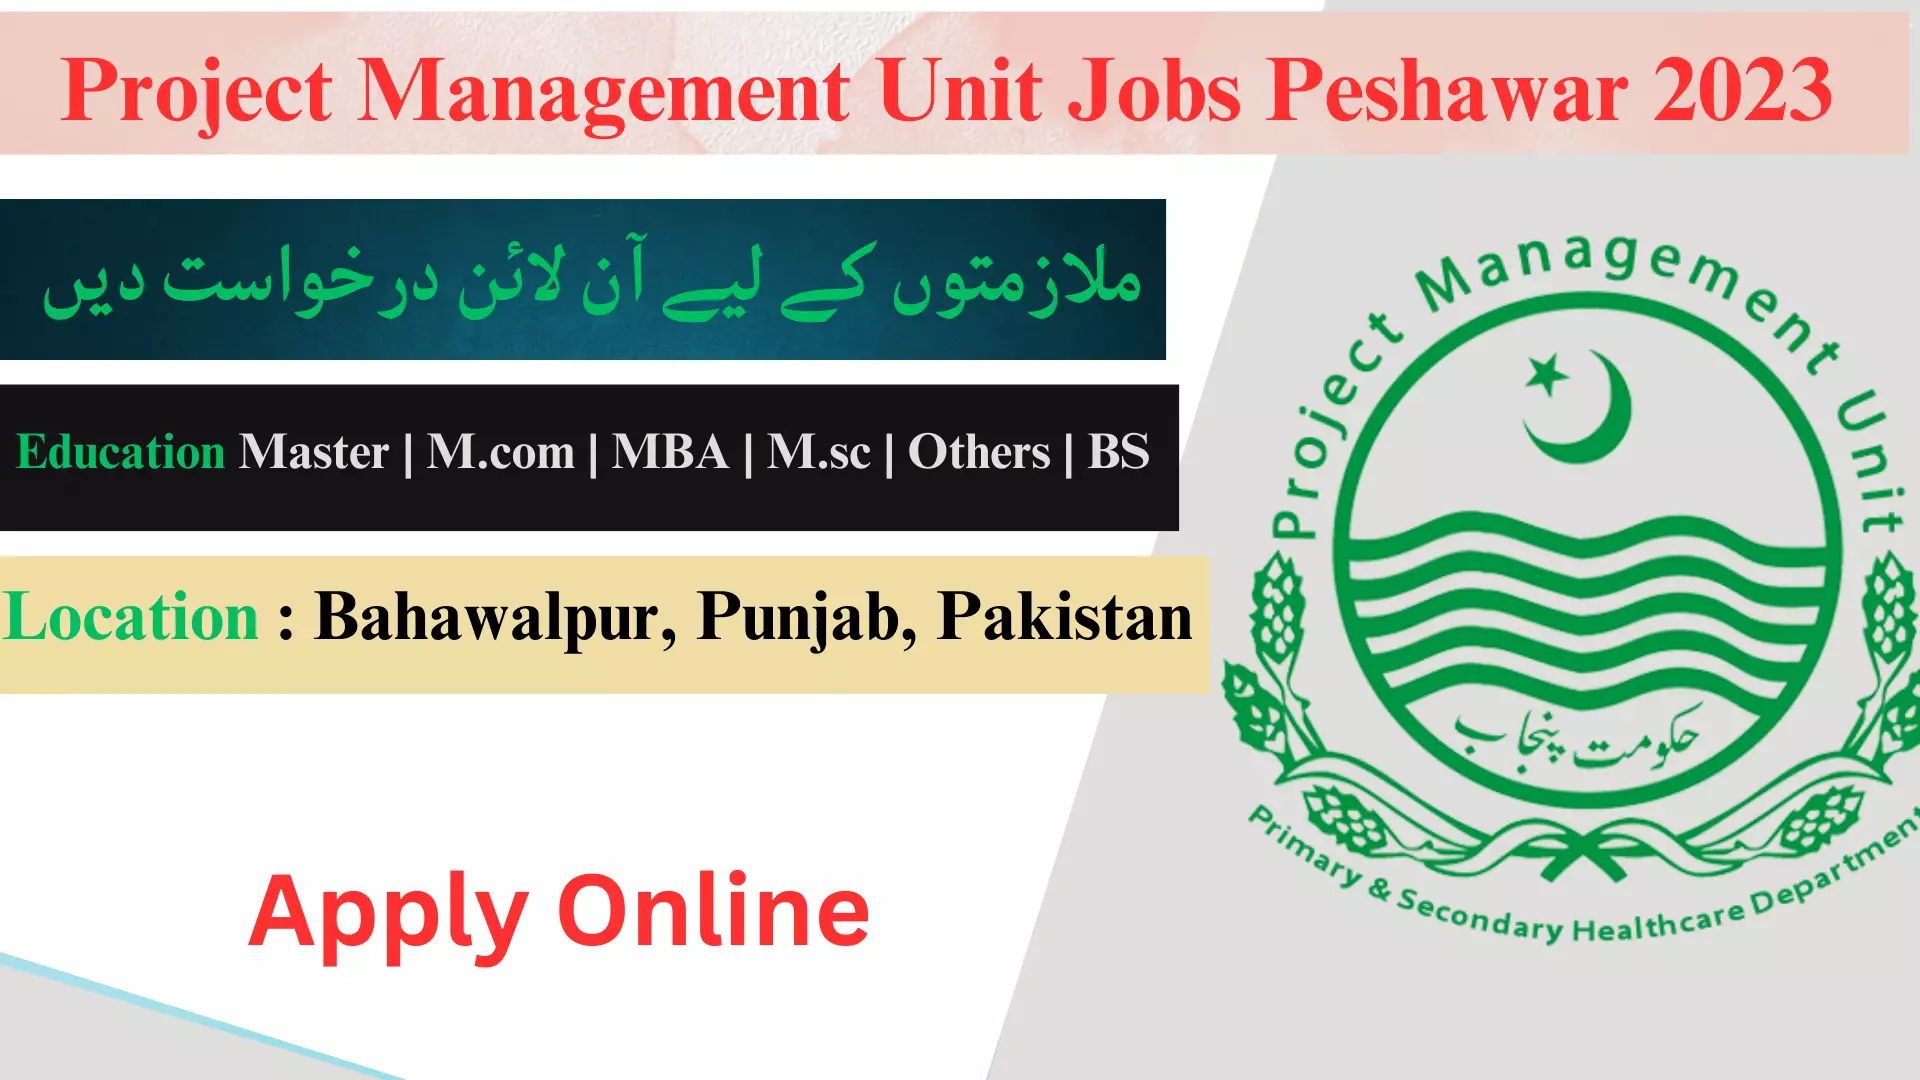 Latest Project Management Unit Jobs Peshawar 2023